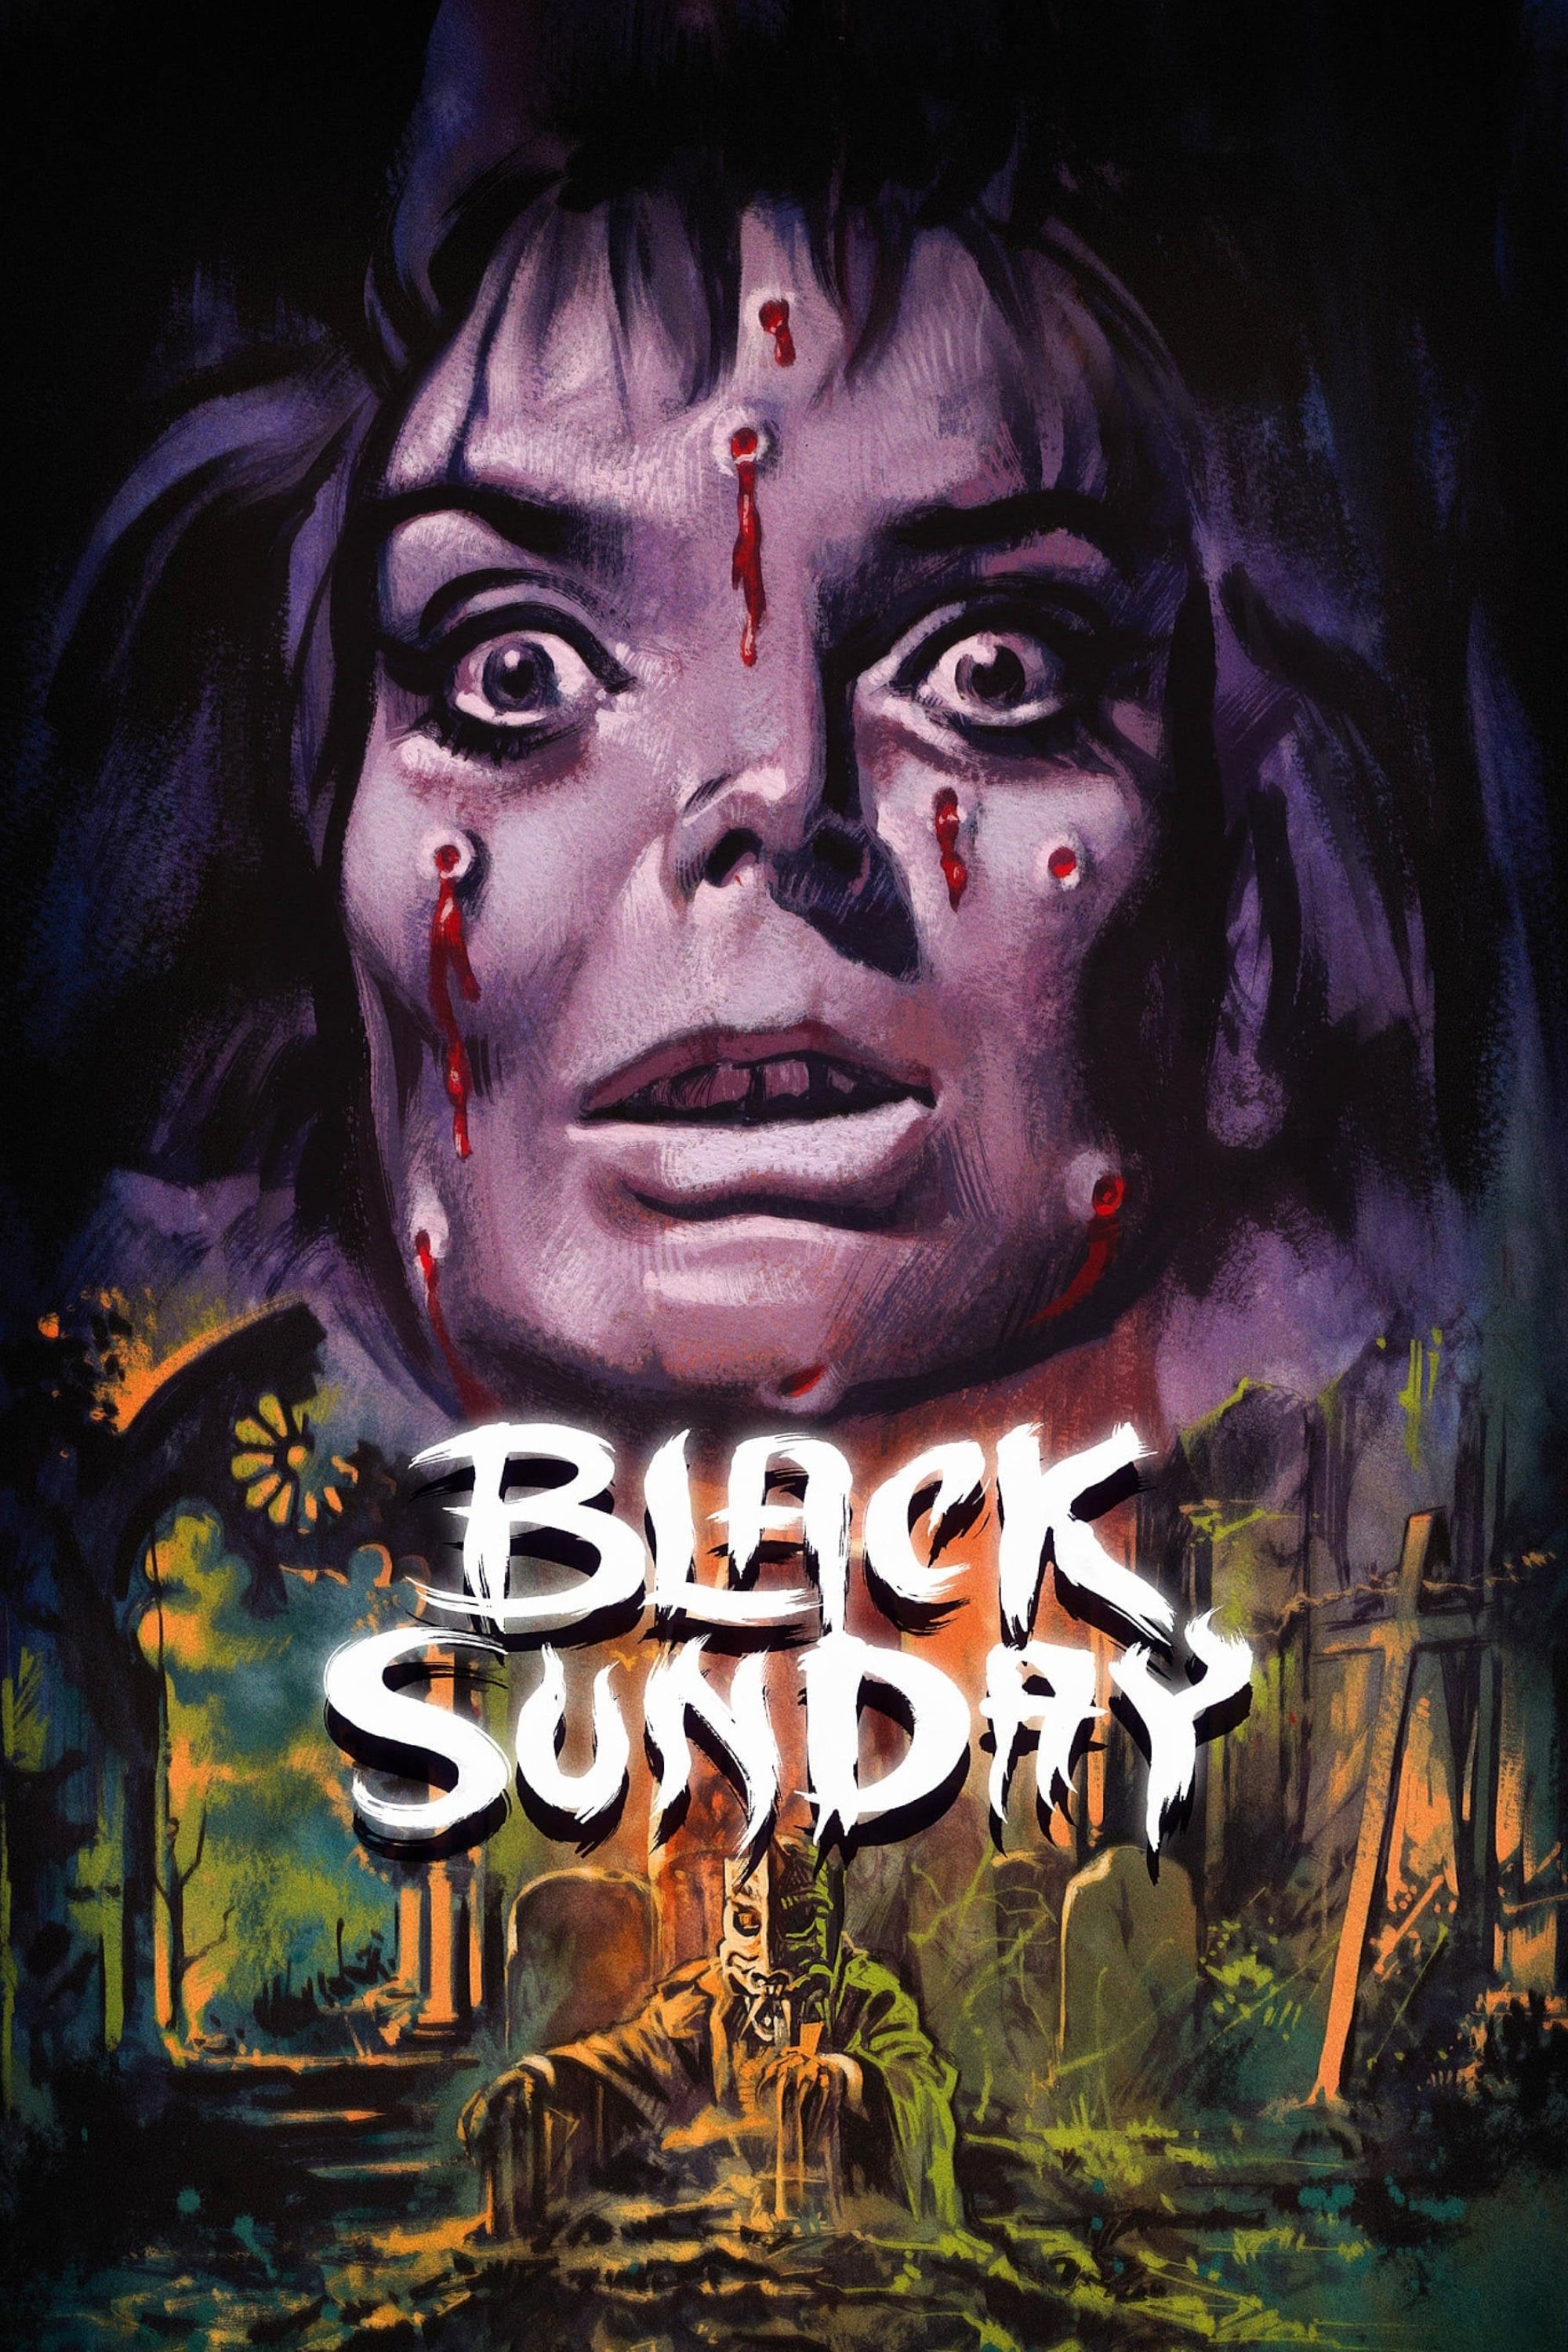 Black Sunday (1960)